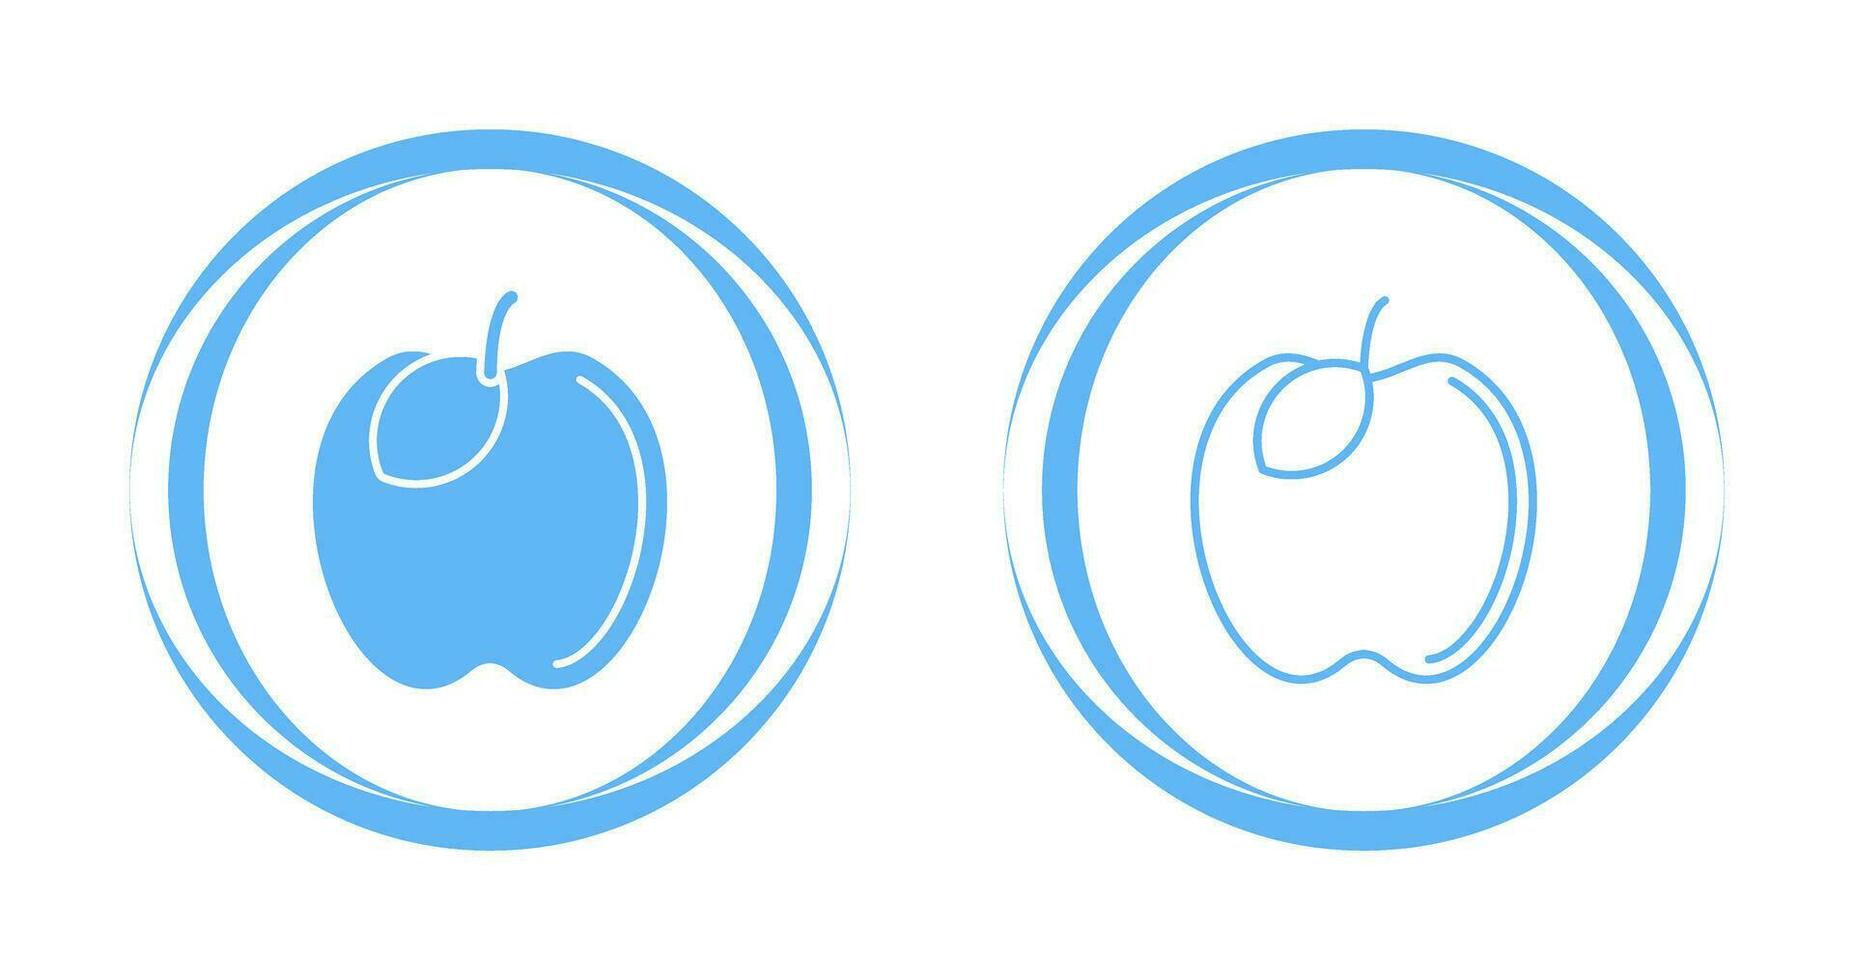 äpple vektor ikon